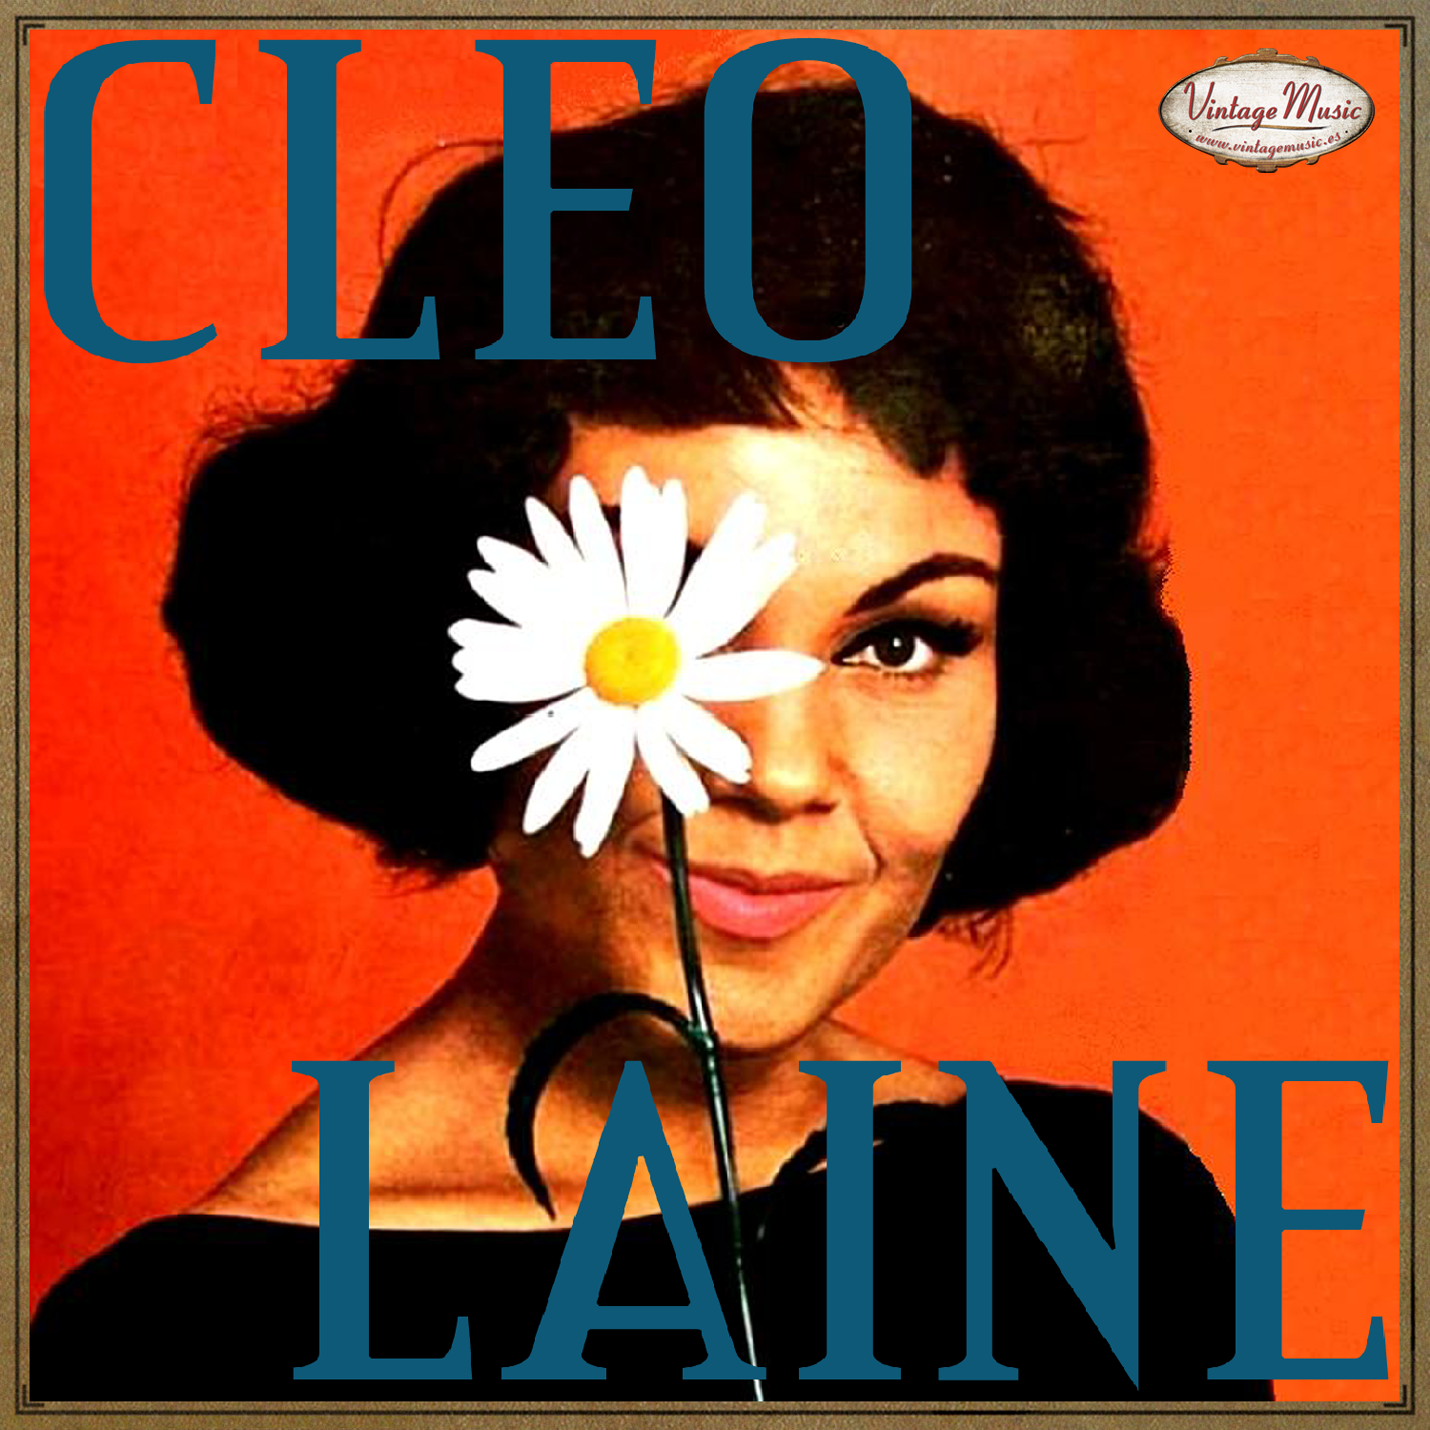 Cleo Laine (Colección Vintage Music)